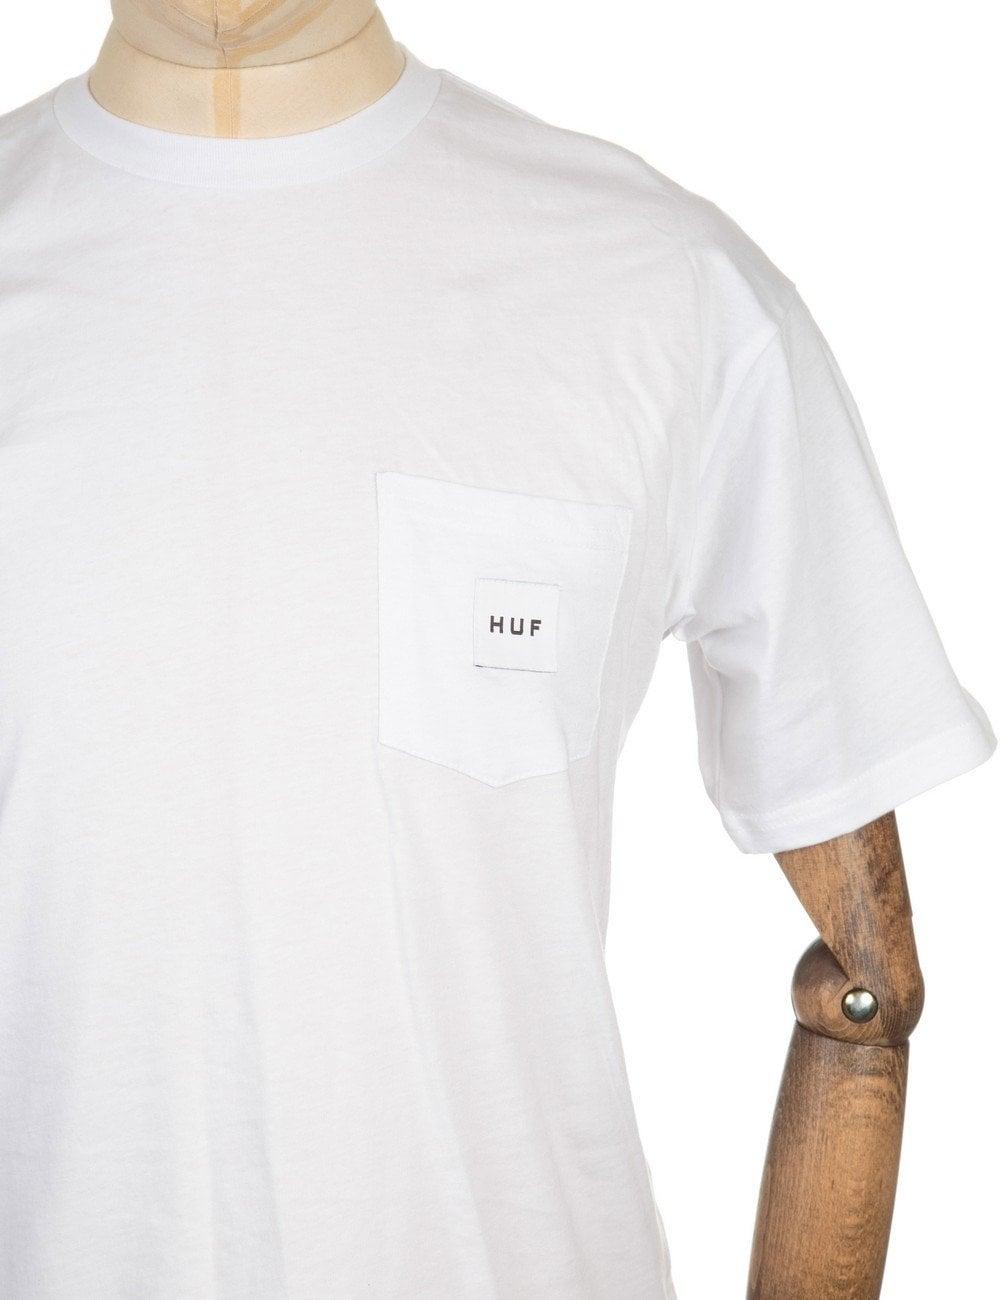 HUF Box Logo - Huf Box Logo Pocket T-shirt - White - T Shirts from Fat Buddha Store UK